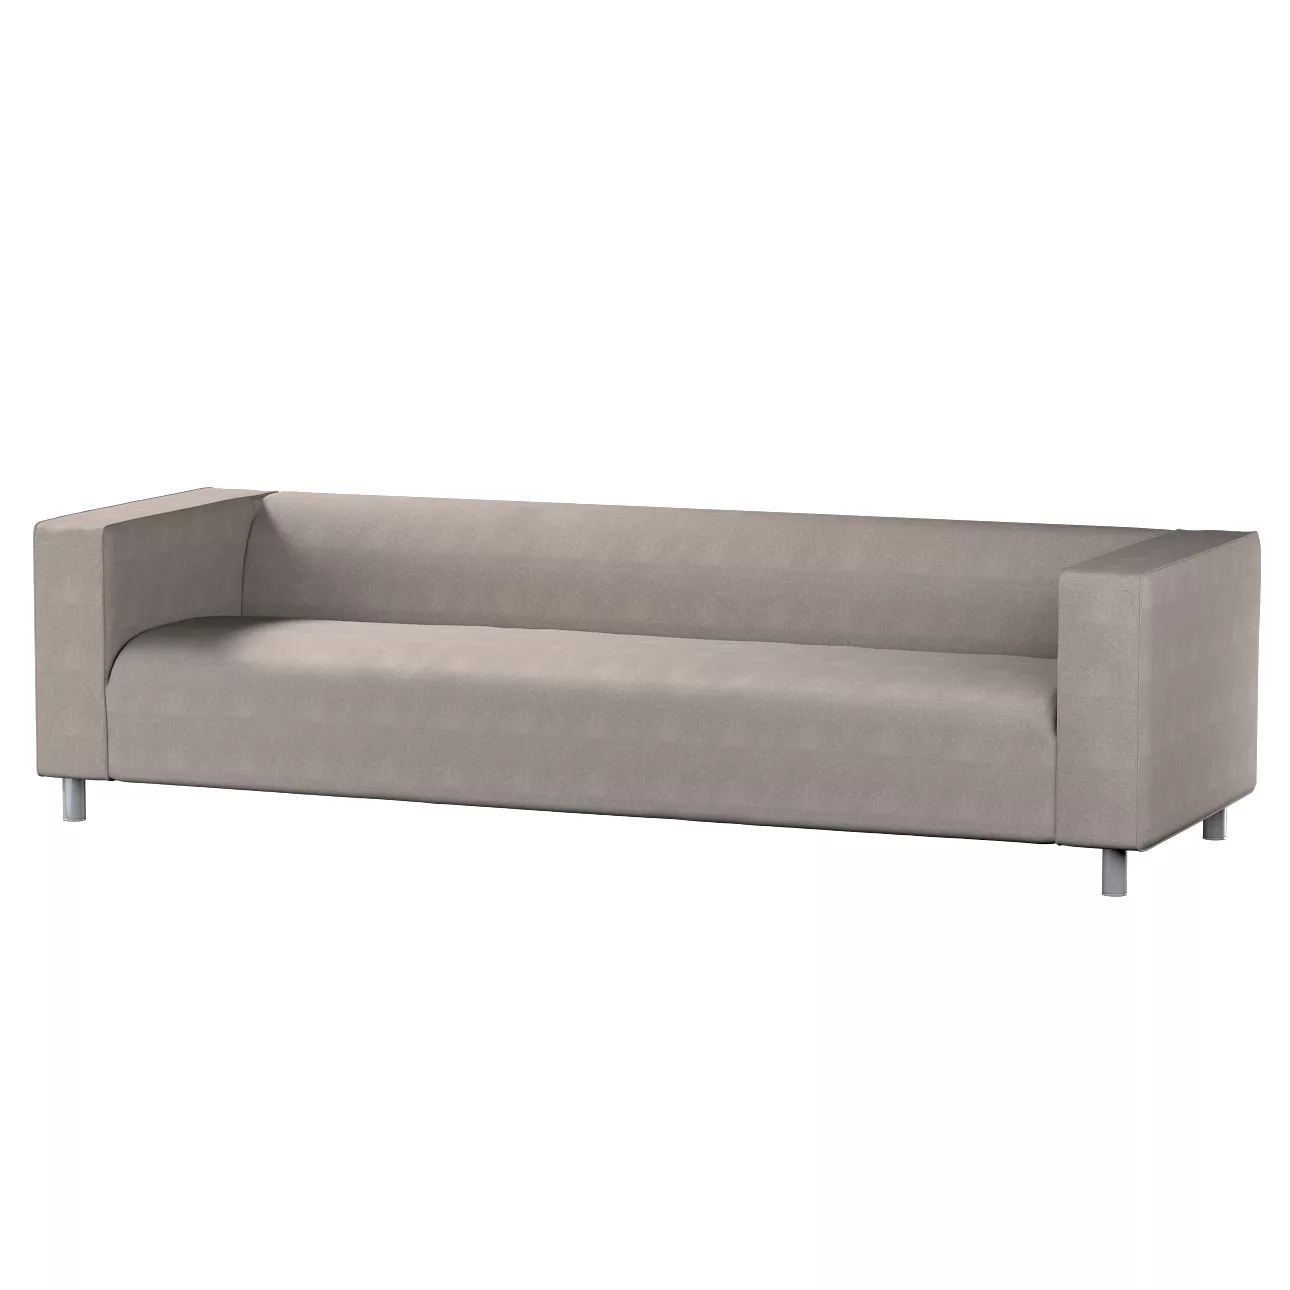 Bezug für Klippan 4-Sitzer Sofa, beige-grau, Bezug für Klippan 4-Sitzer, Et günstig online kaufen